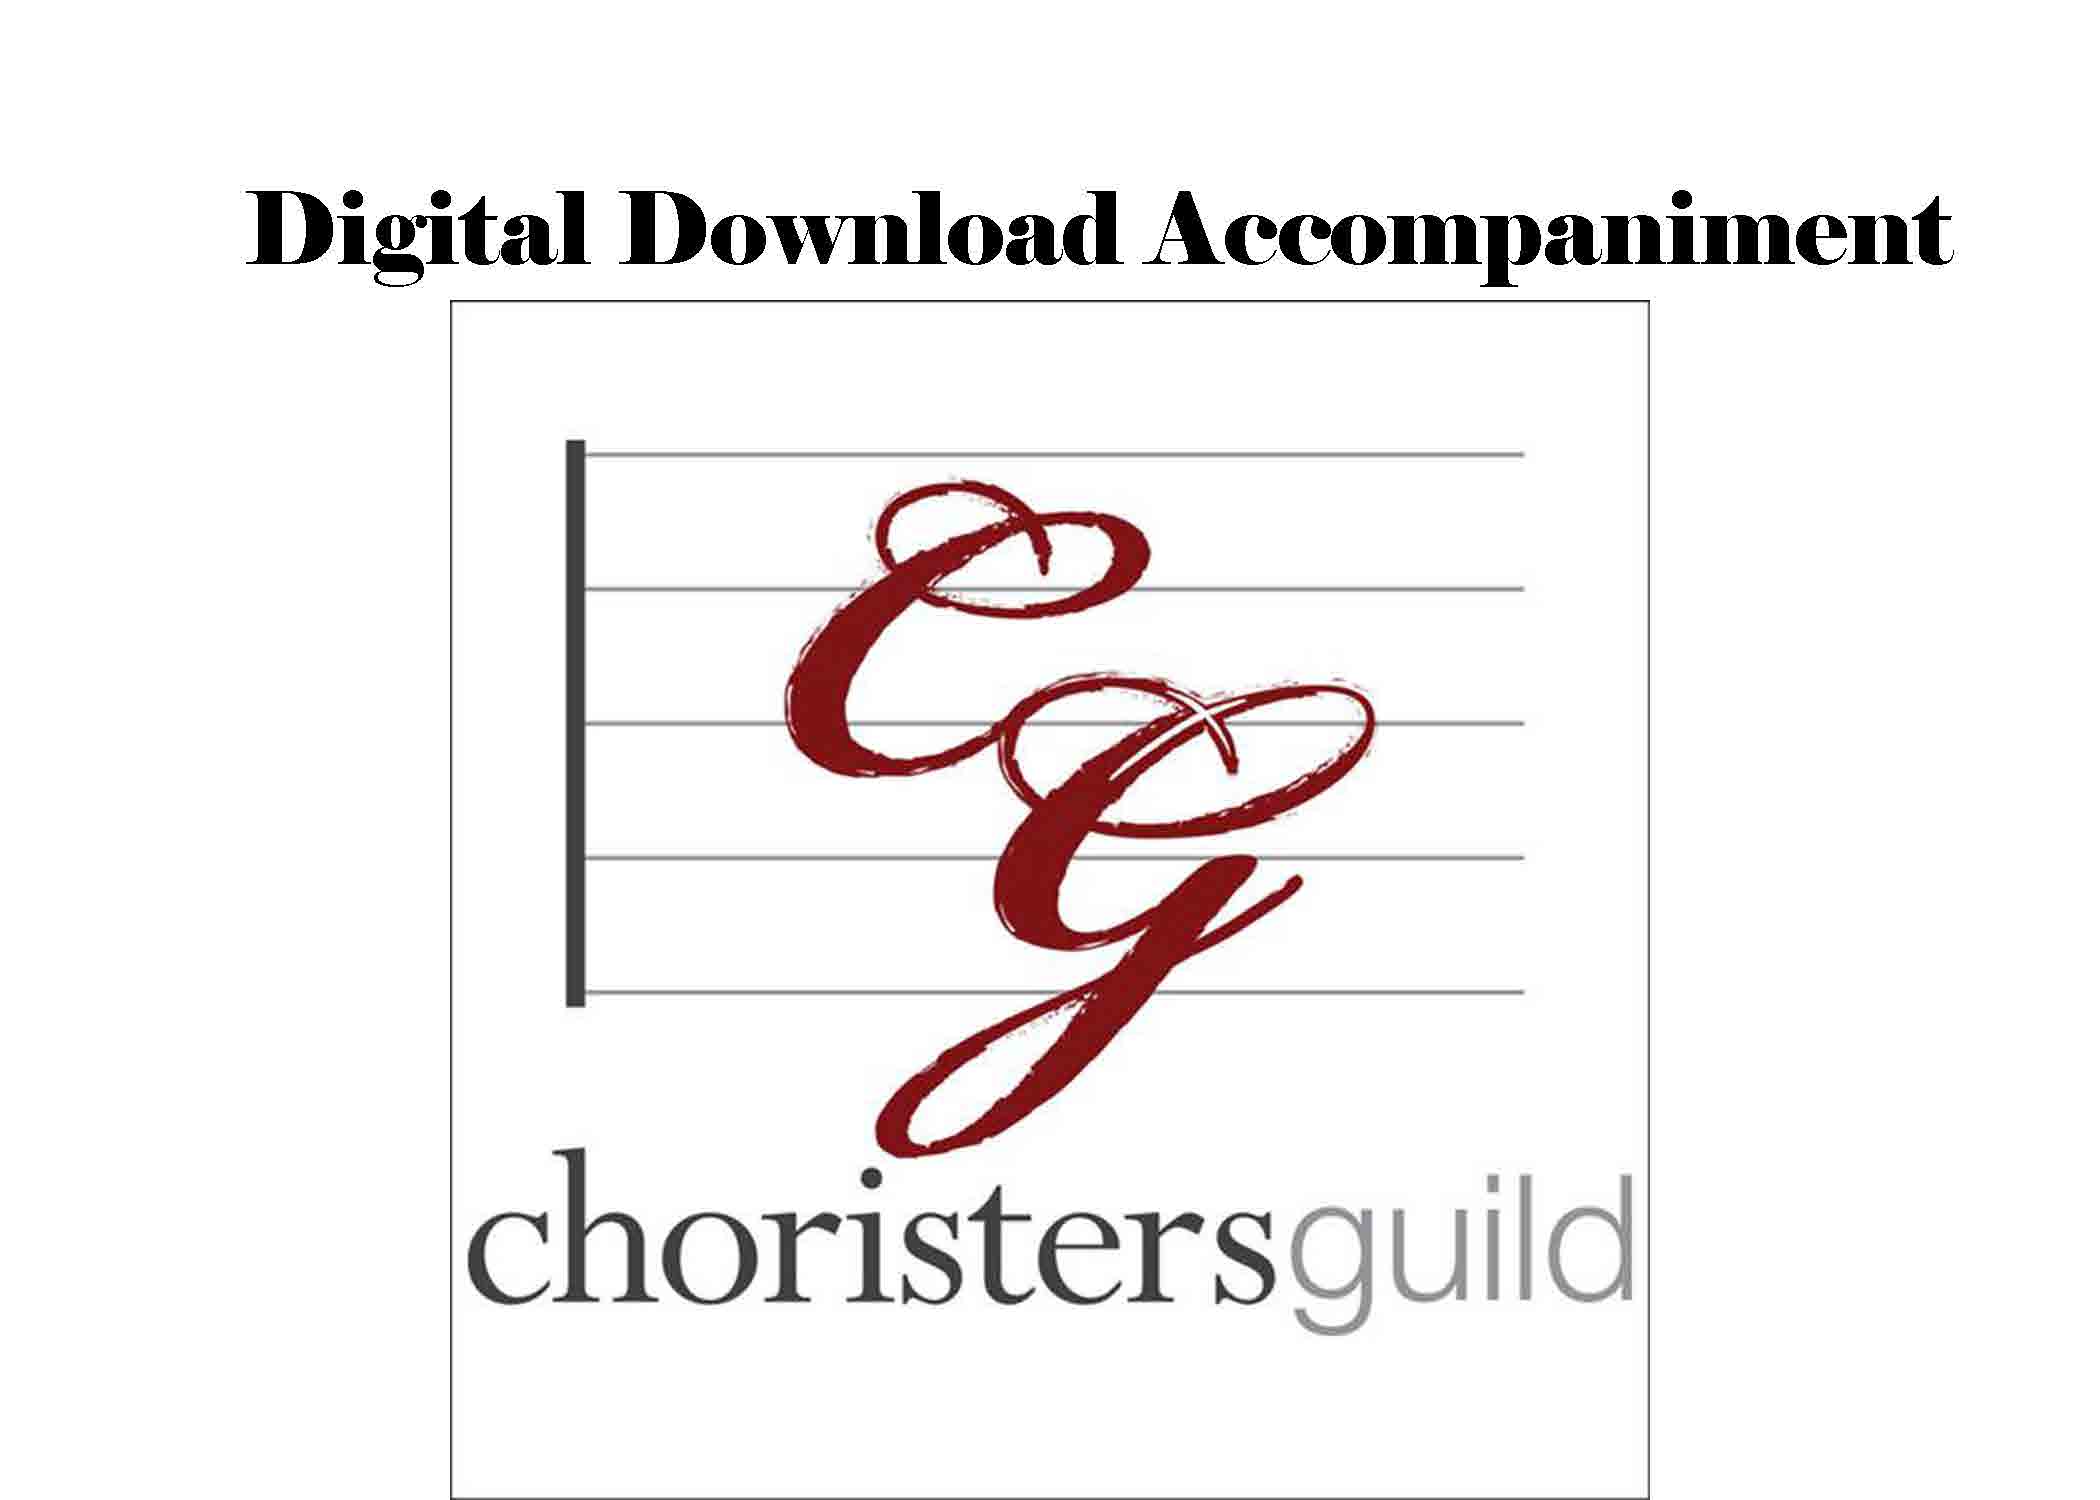 Storms Reproducible Digital Audio Pak (Demo and Accompaniment MP3s)